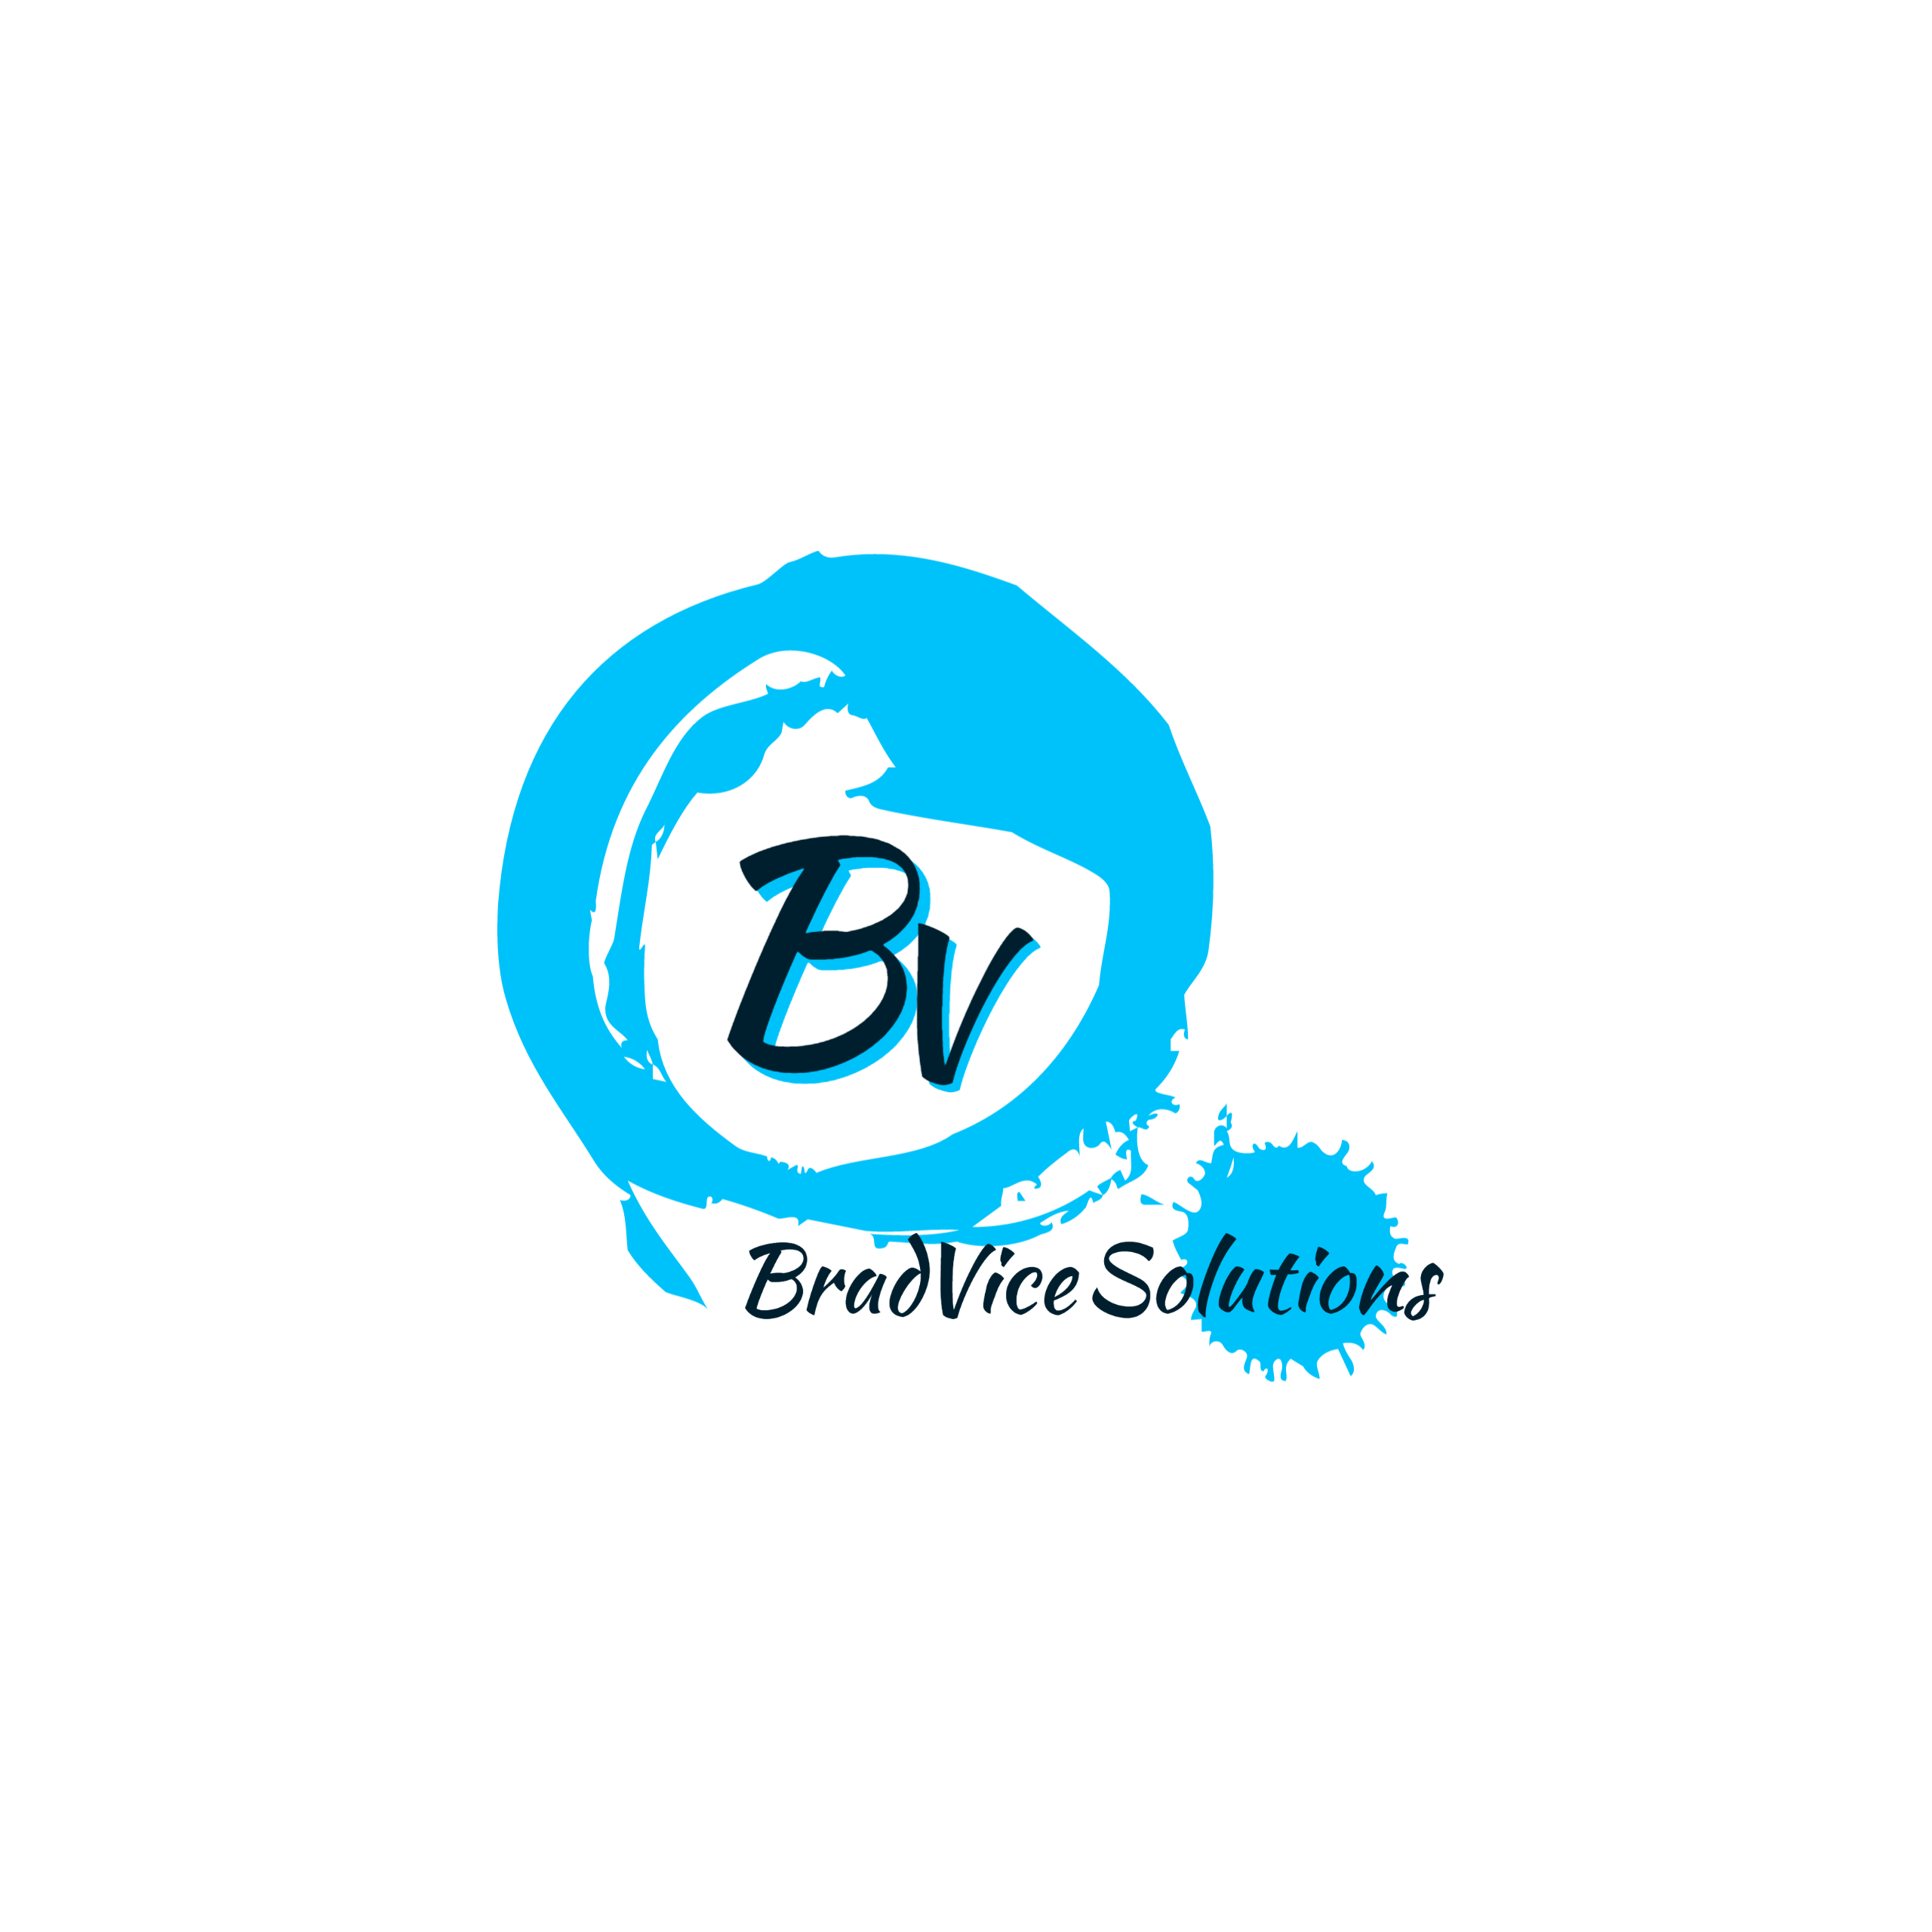 Bradvice Solutions Comapny logo